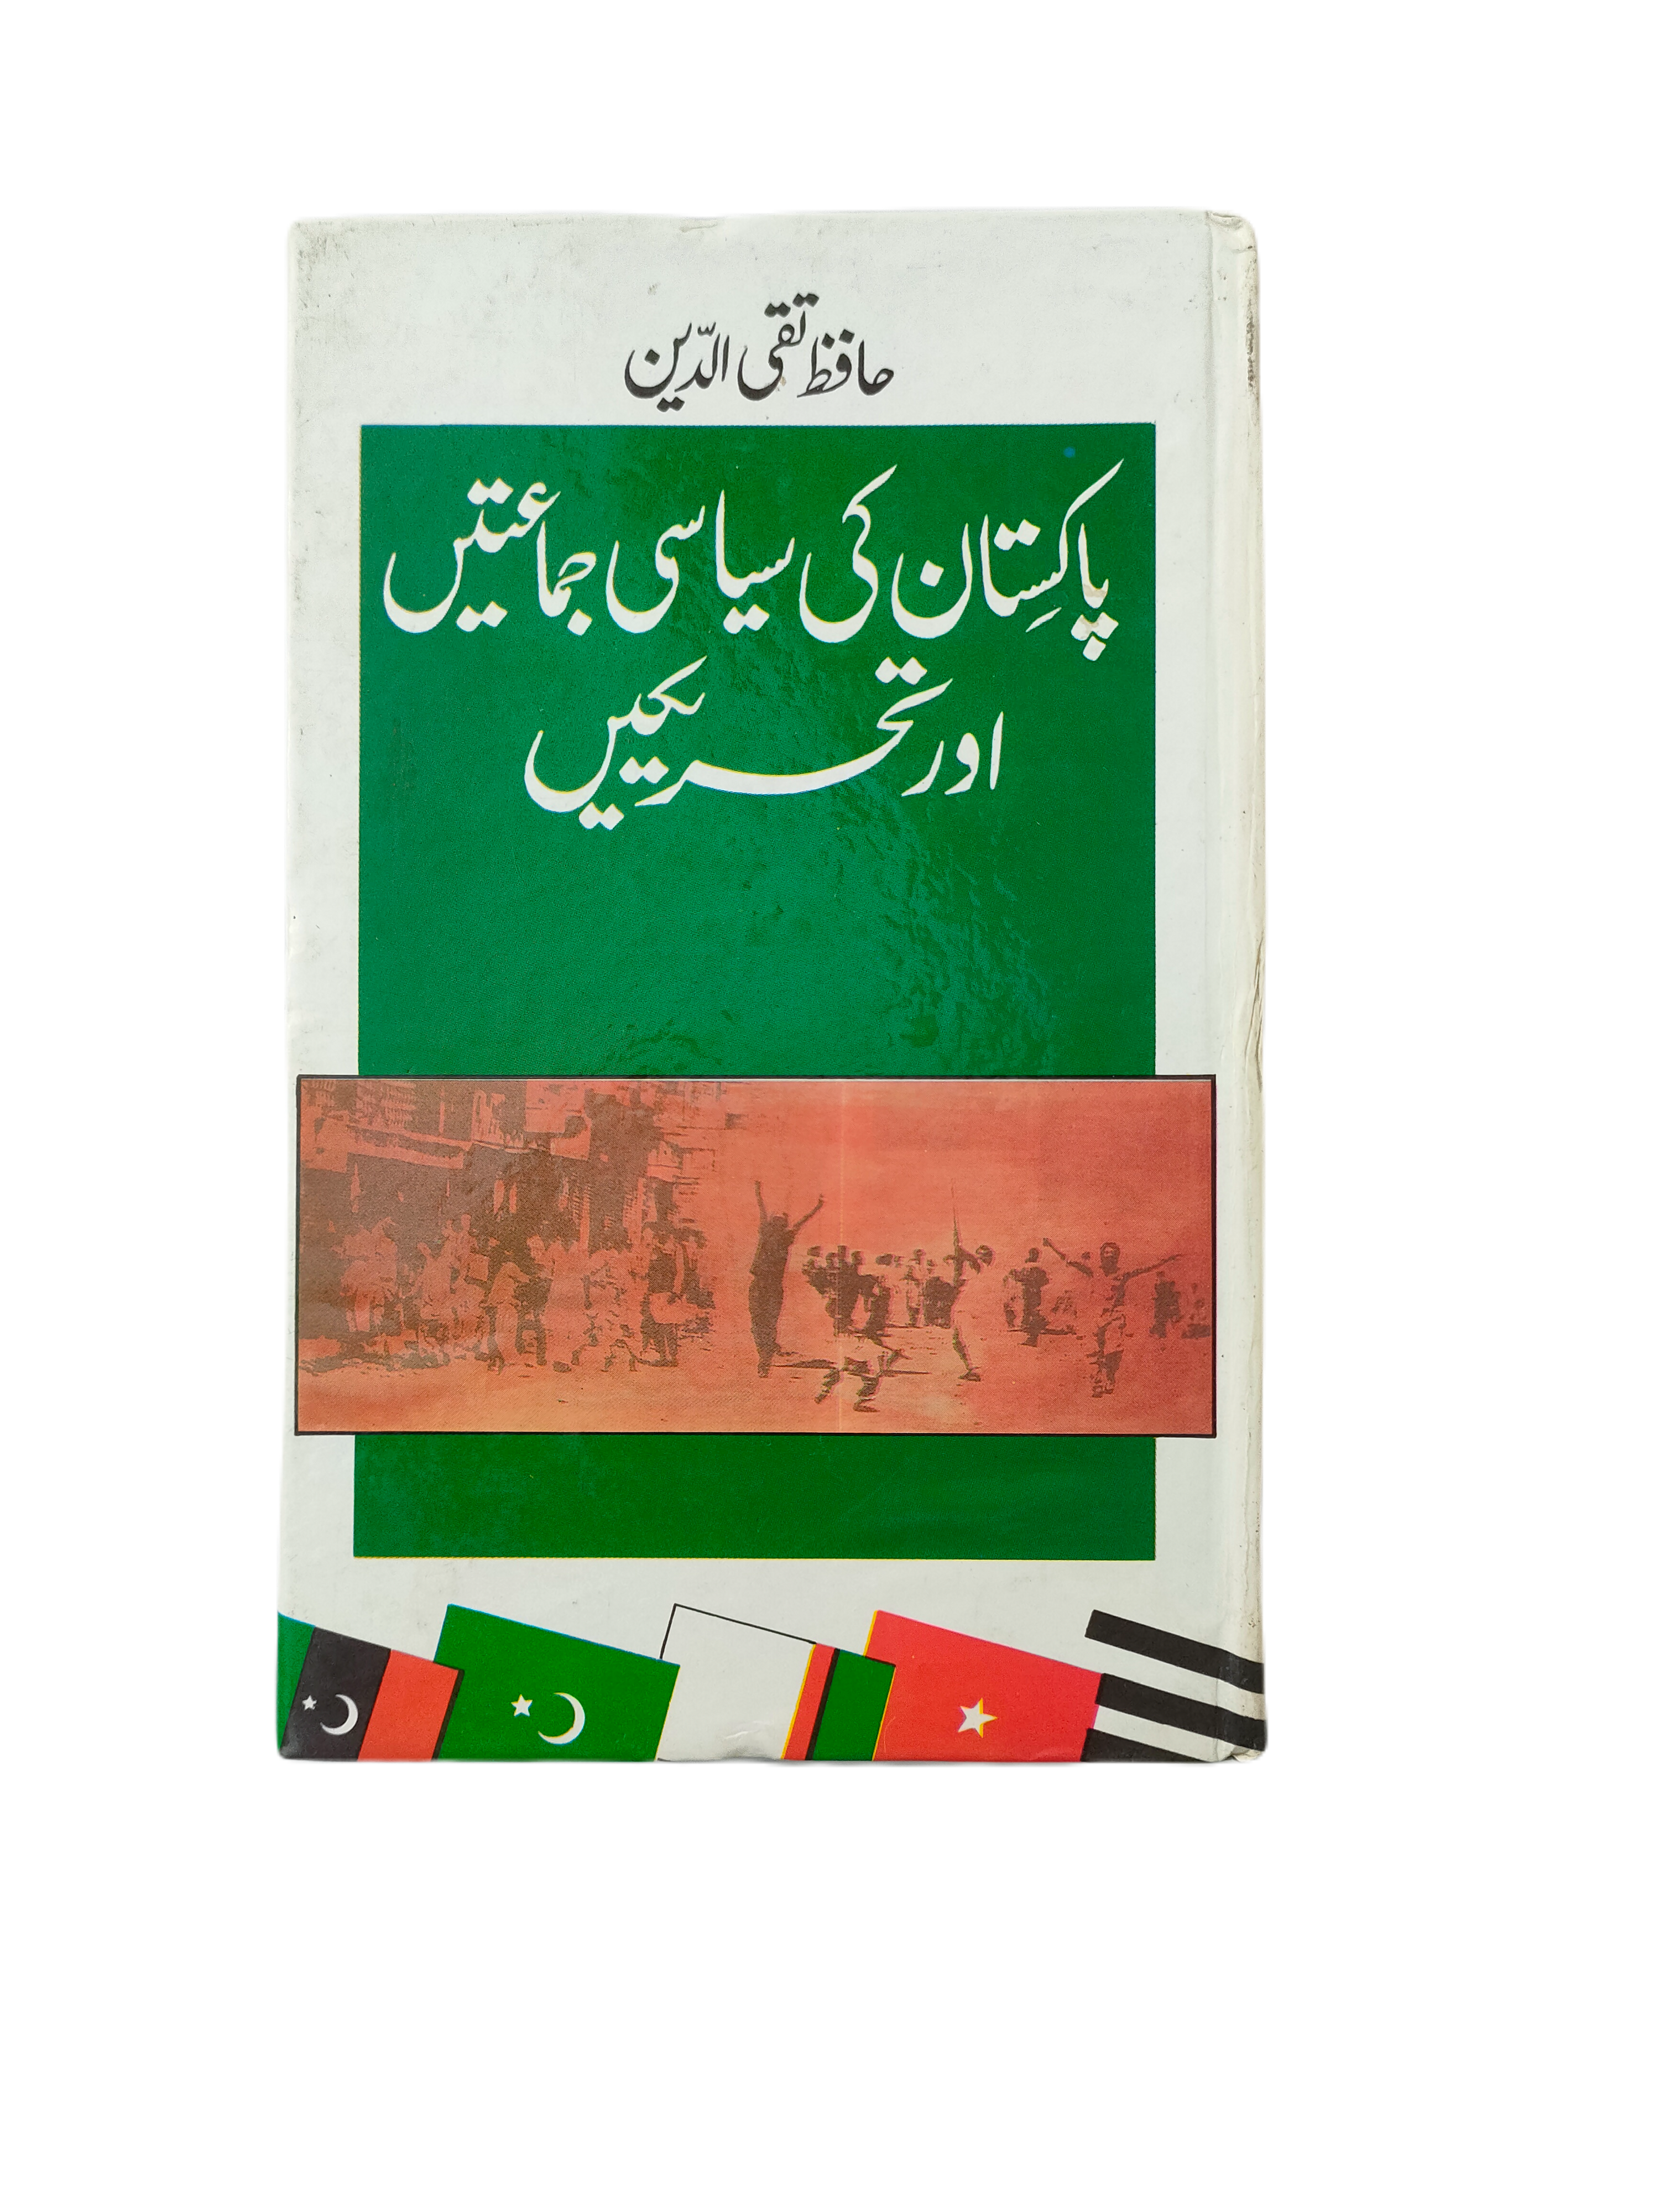 Pakistan Ki Siyasi Jamatain Aur Tehreekain (Political Parties and Movements in Pakistan)